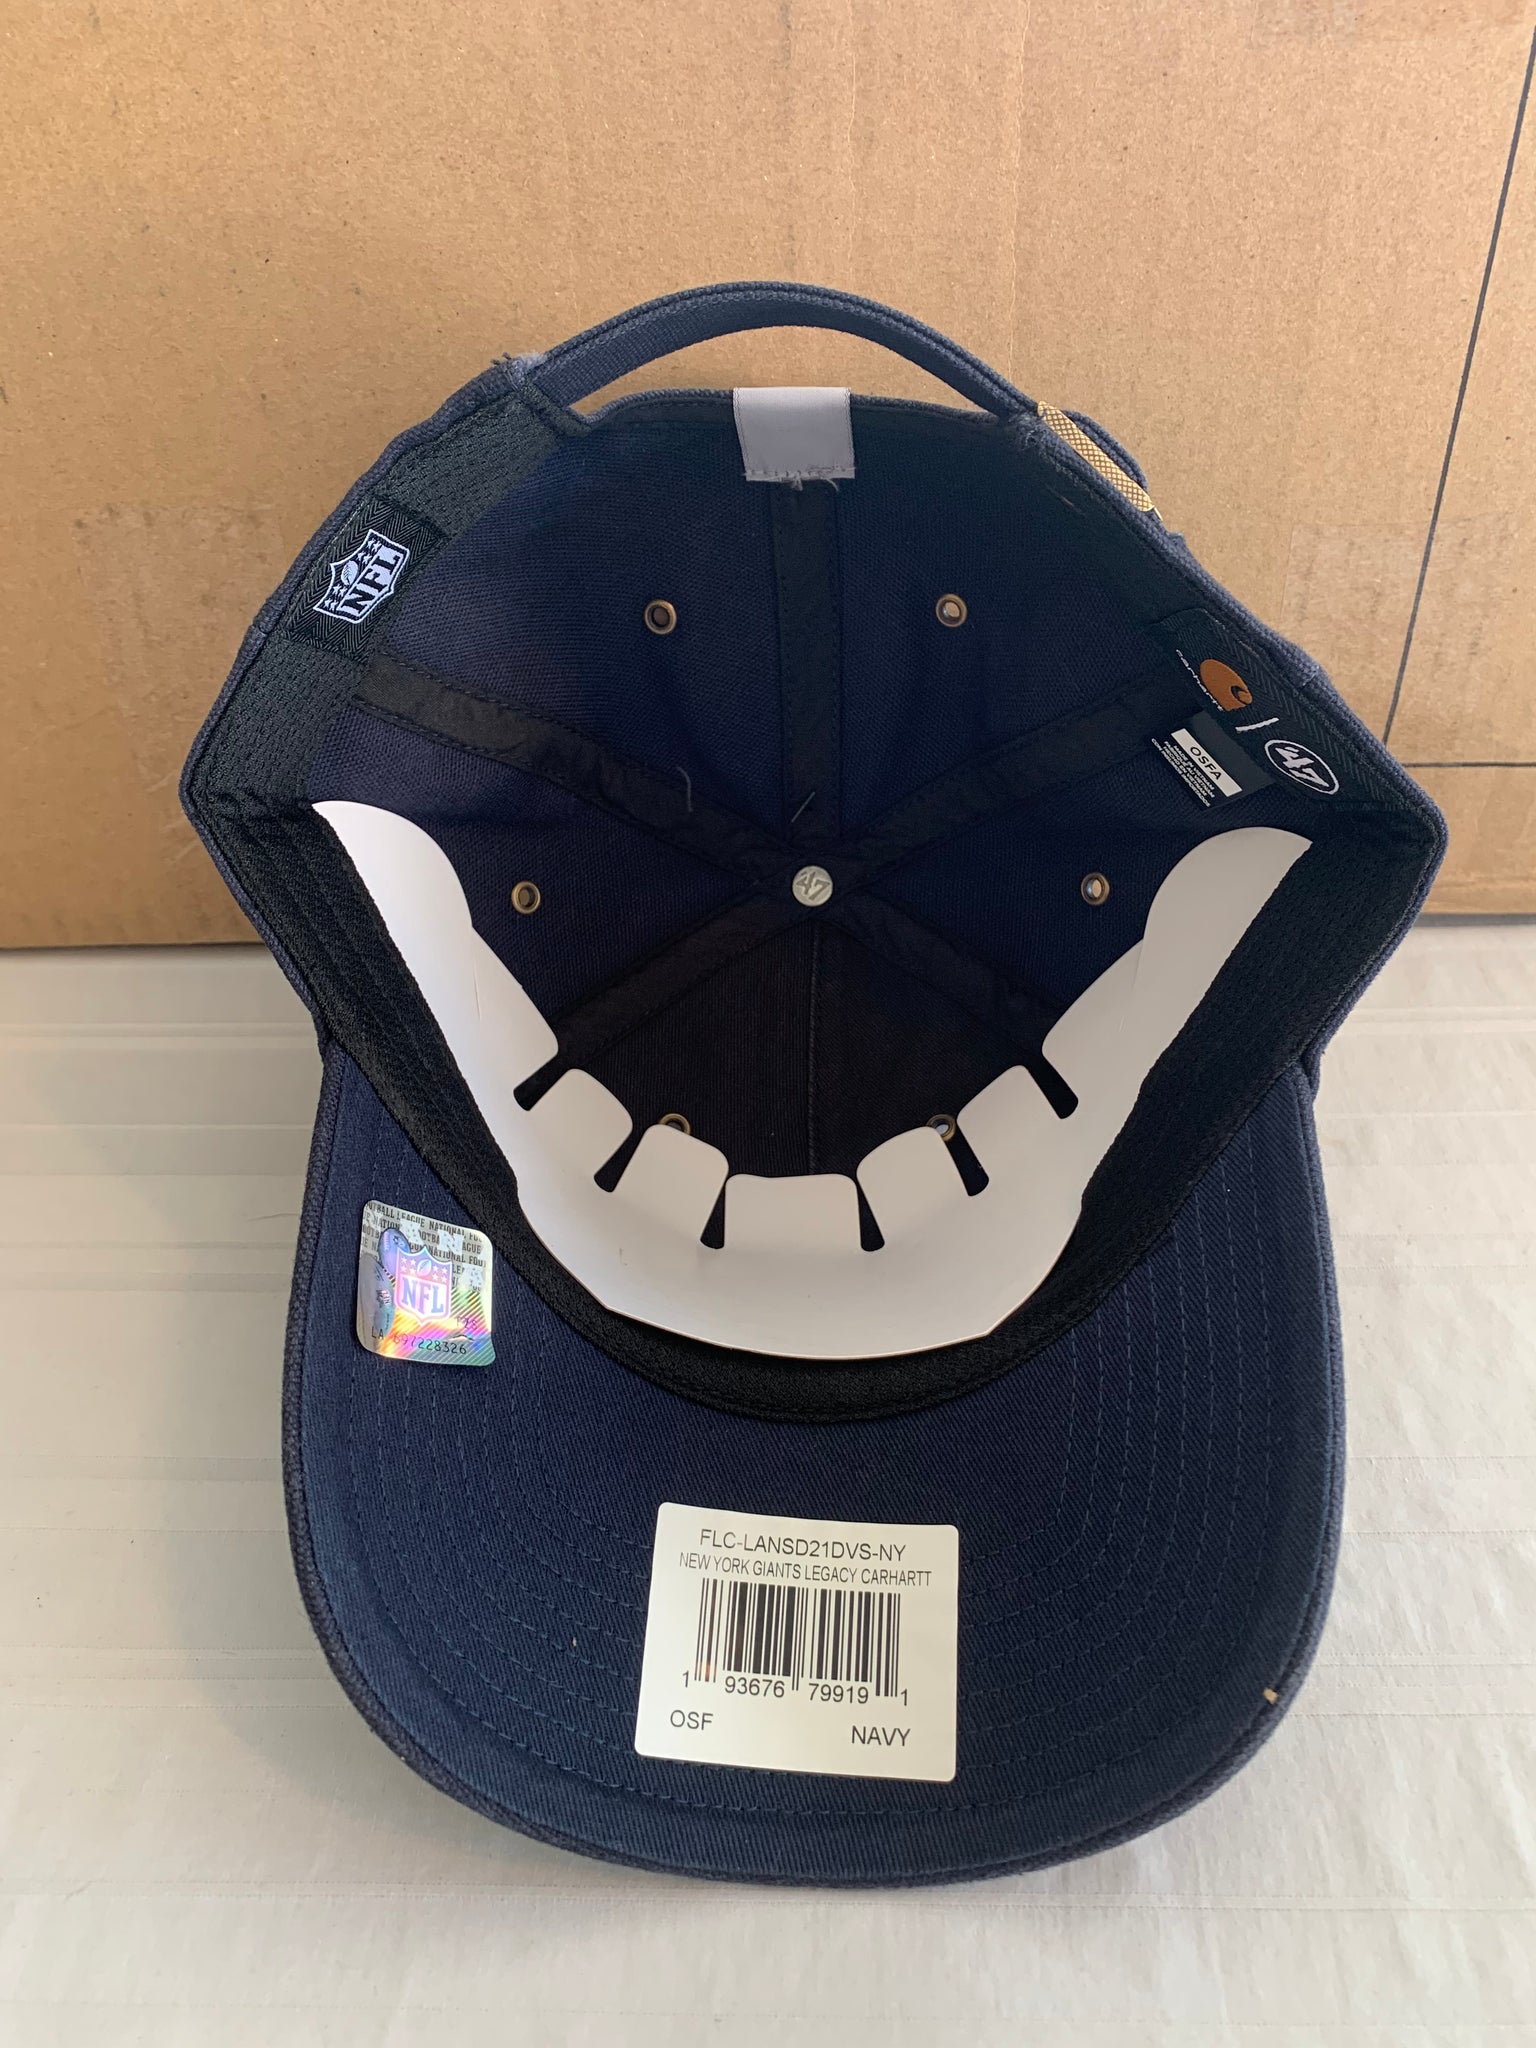 New York Giants Throwback NFL '47 Brand Carhartt Mens Navy Clean Up  Adjustable Hat